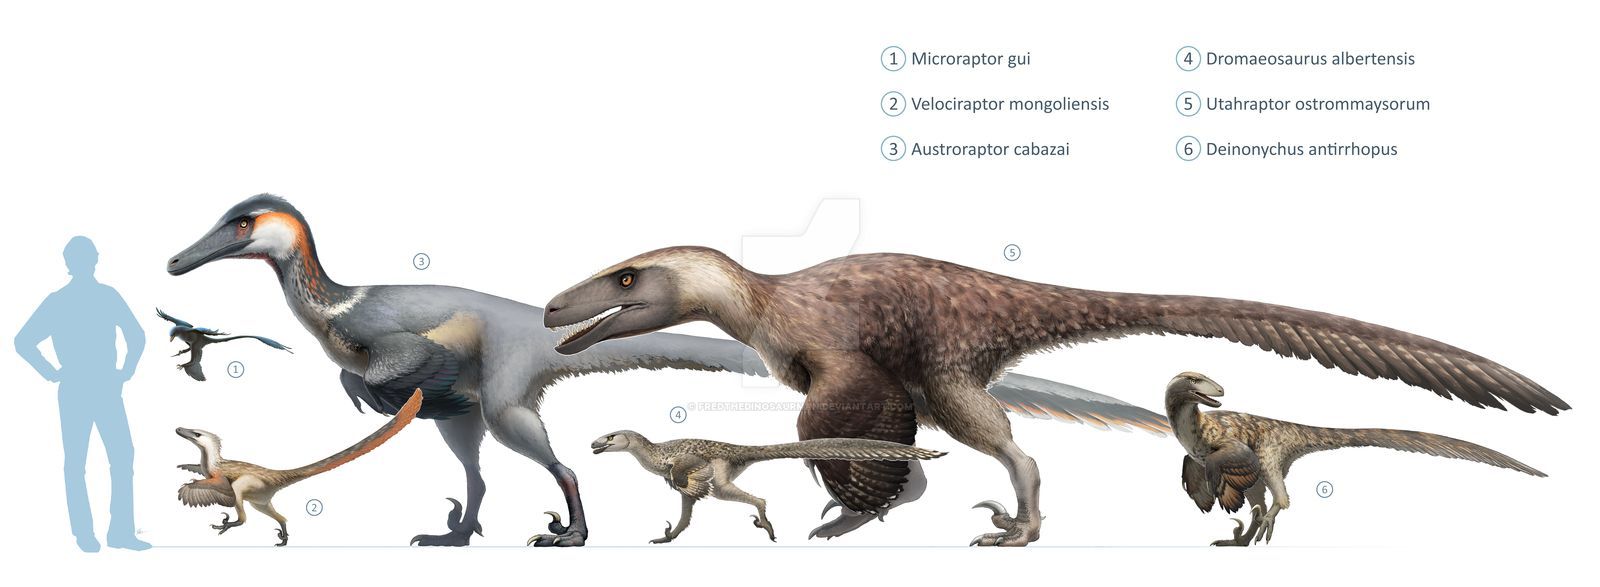 dromaeosauridae_size_chart_for_wikipedia_by_fredthedinosaurman_dbq2veh-fullview.jpg